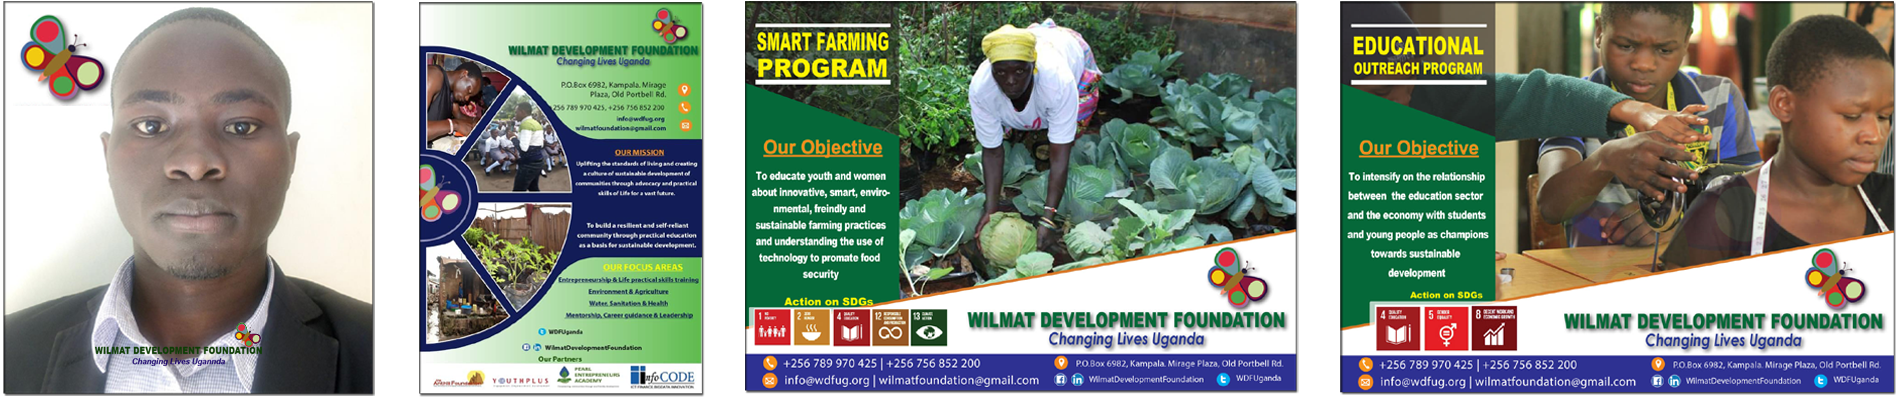 Wilmat Development Foundation  - Changing Lives In Uganda  -  Smart Farming Program - Educational Outreach Program